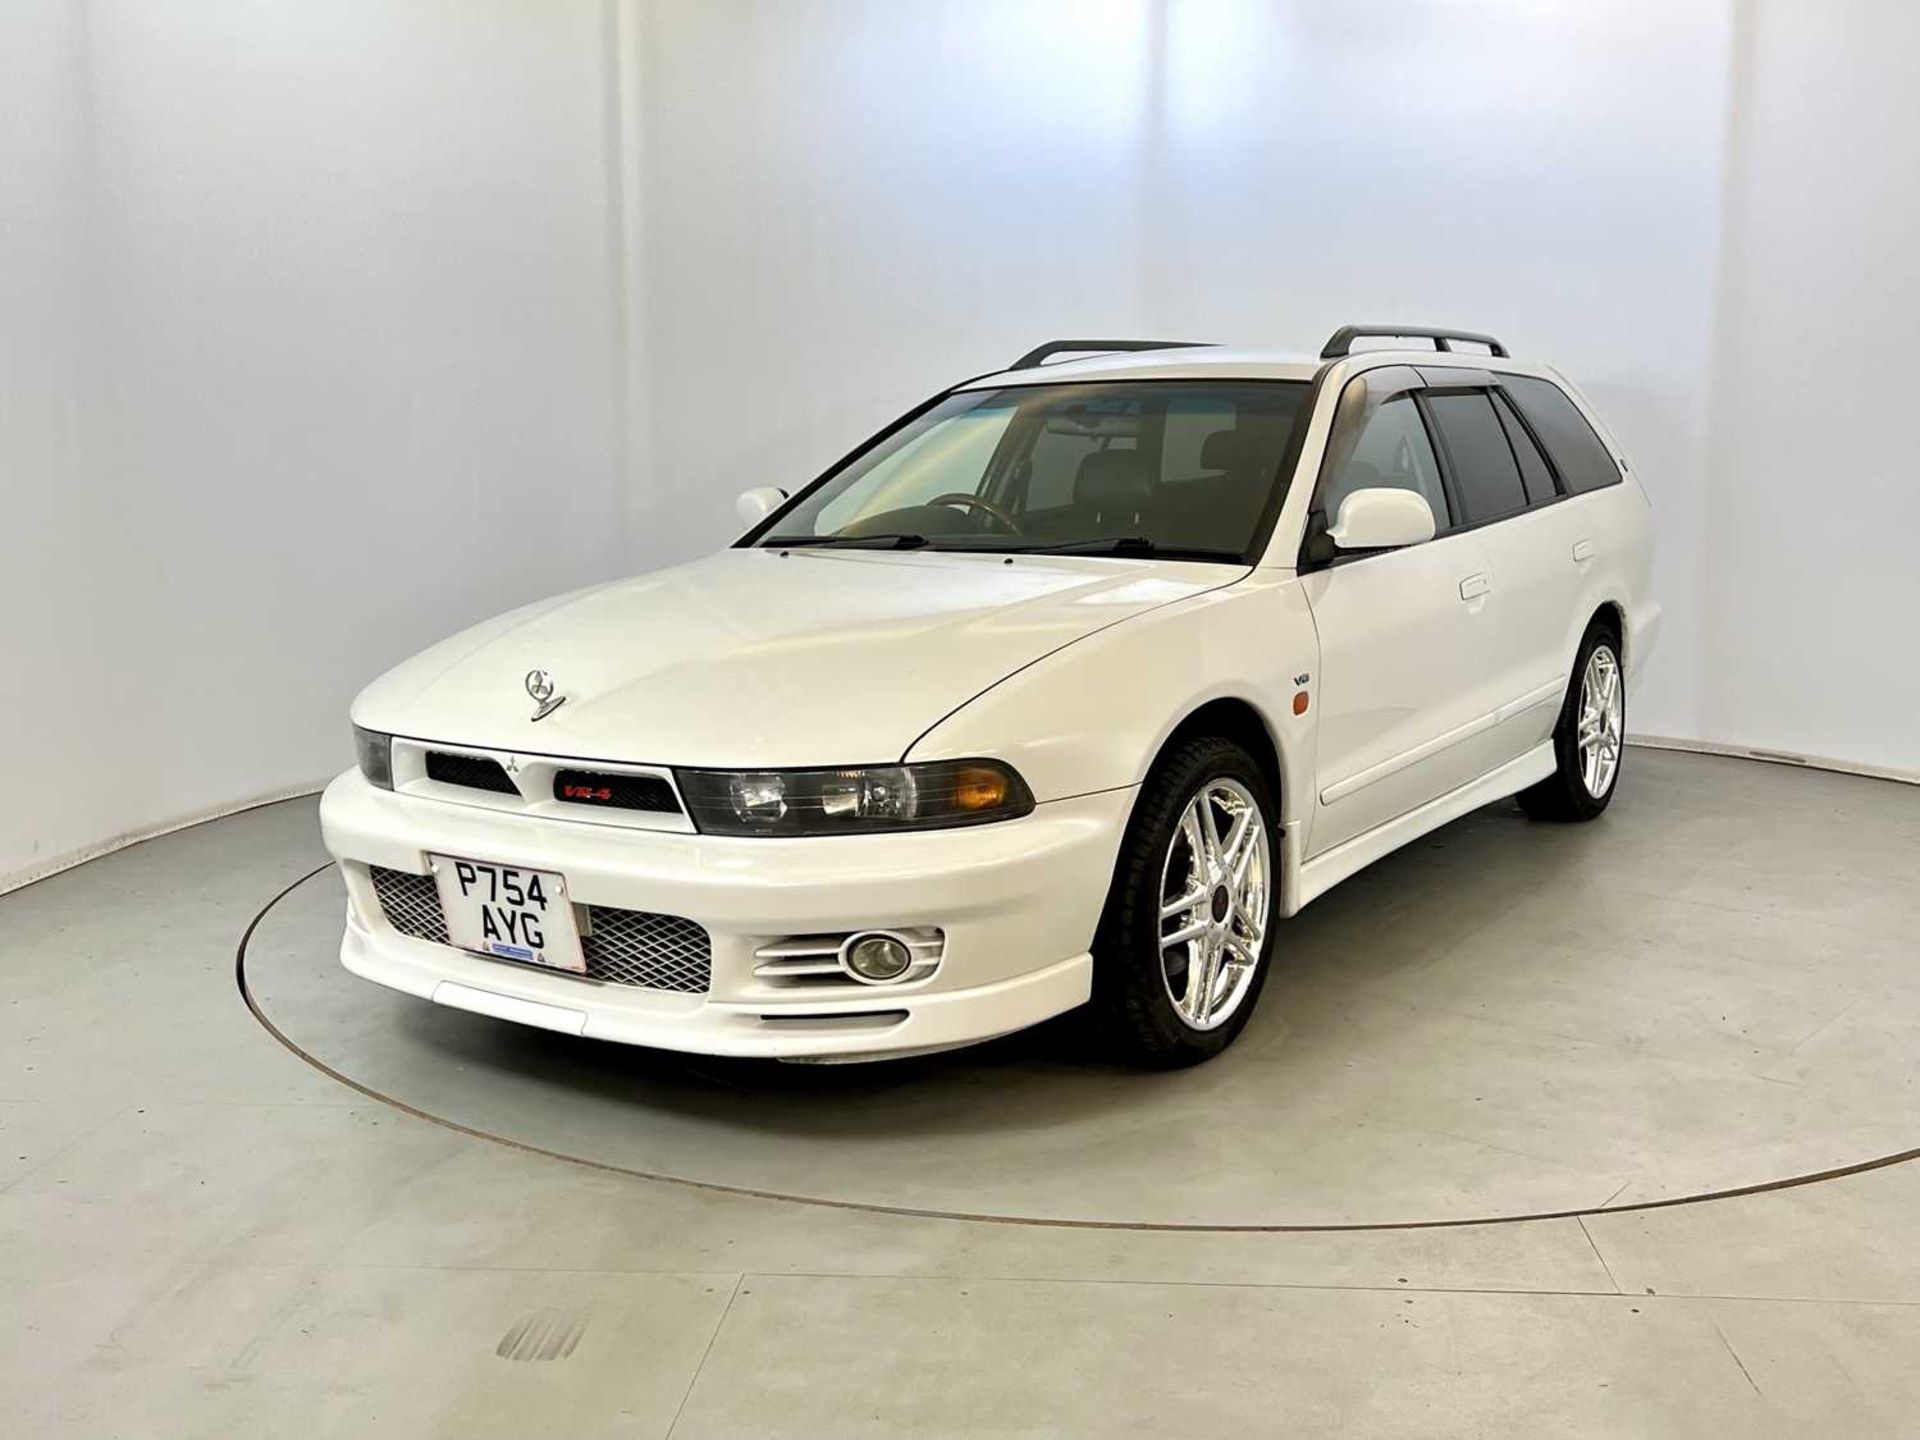 1997 Mitsubishi Legnum VR4 - Image 3 of 33